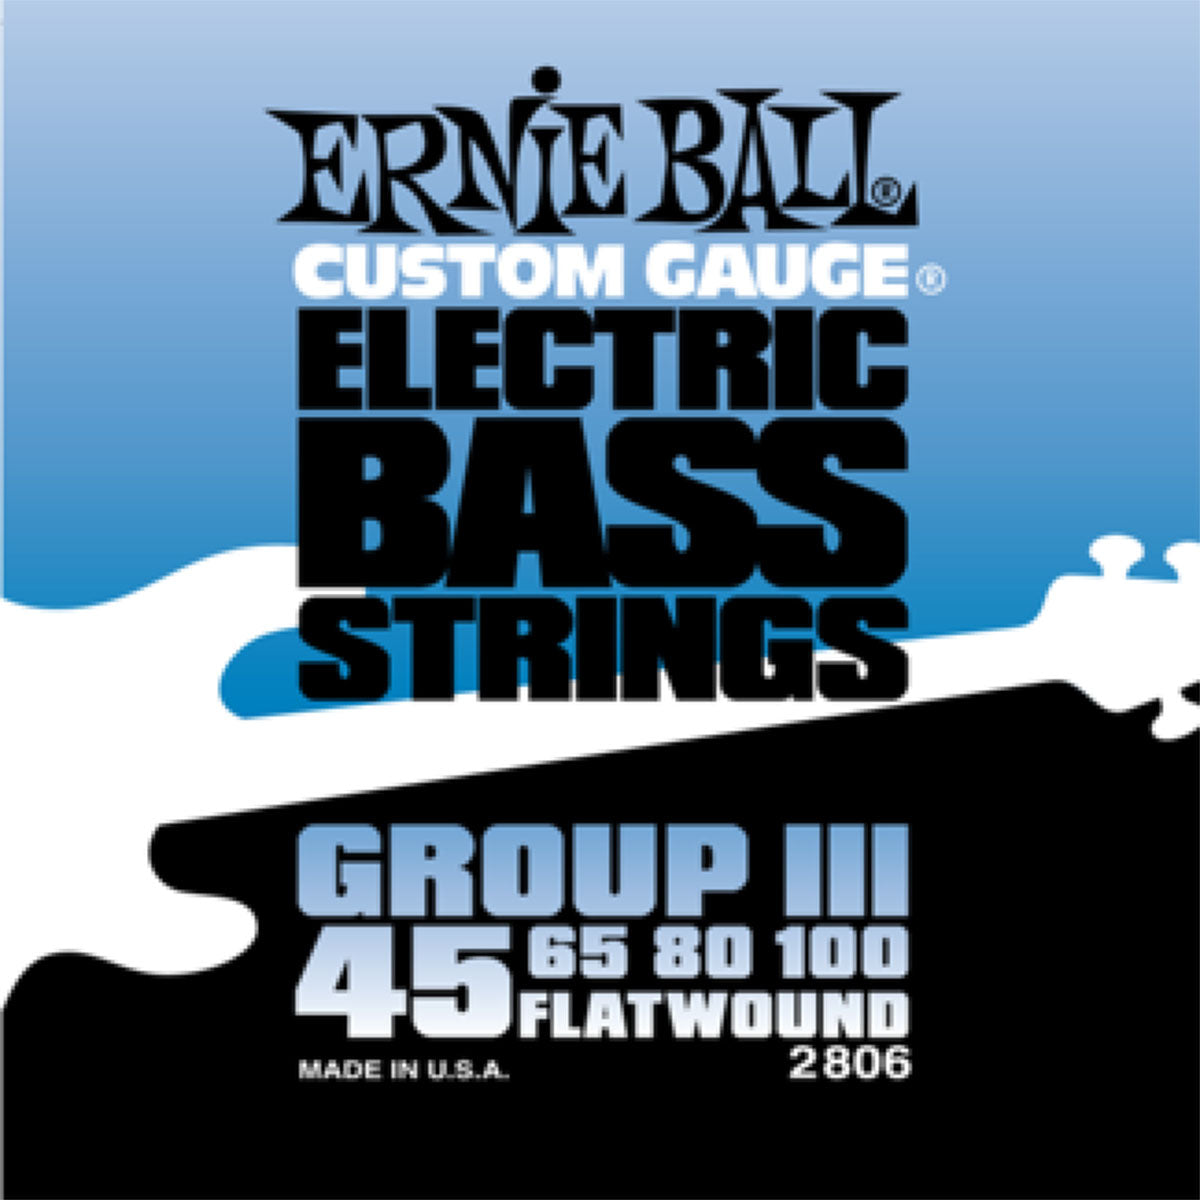 Ernie Ball 2806 Bass Guitar Strings Flatwound Group III 45-100